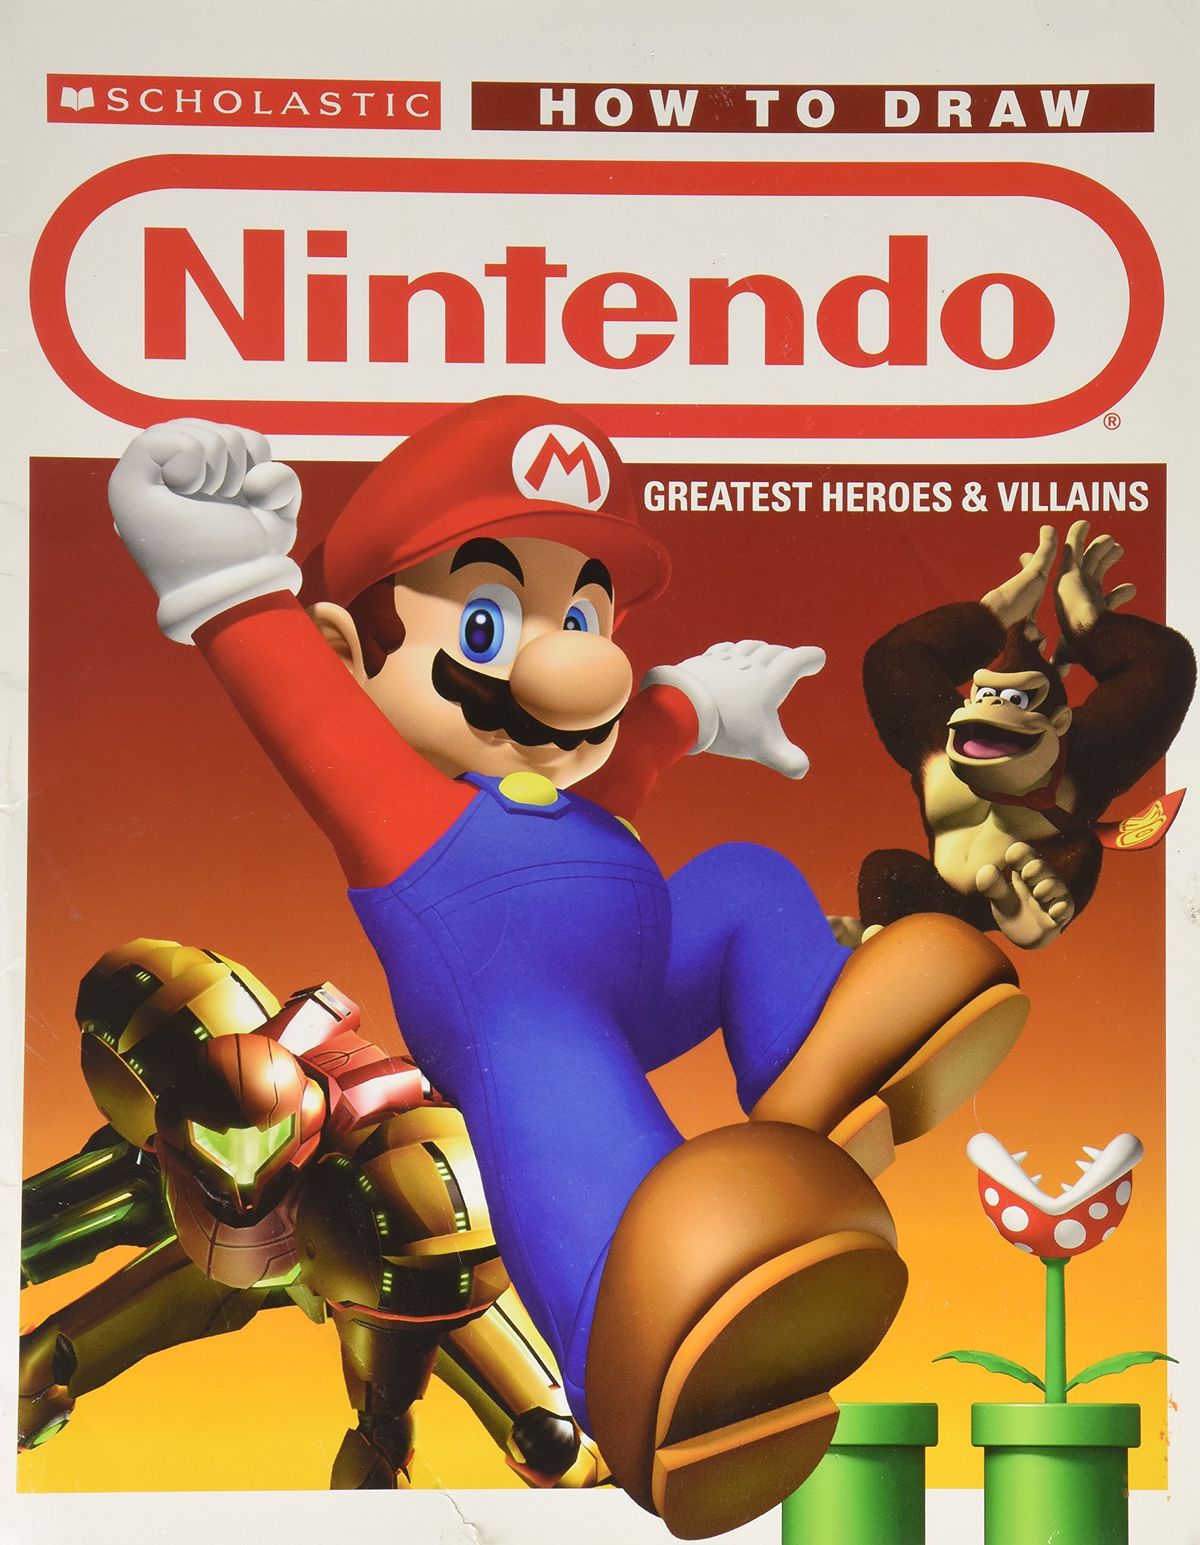 Mario, Heroes Wiki